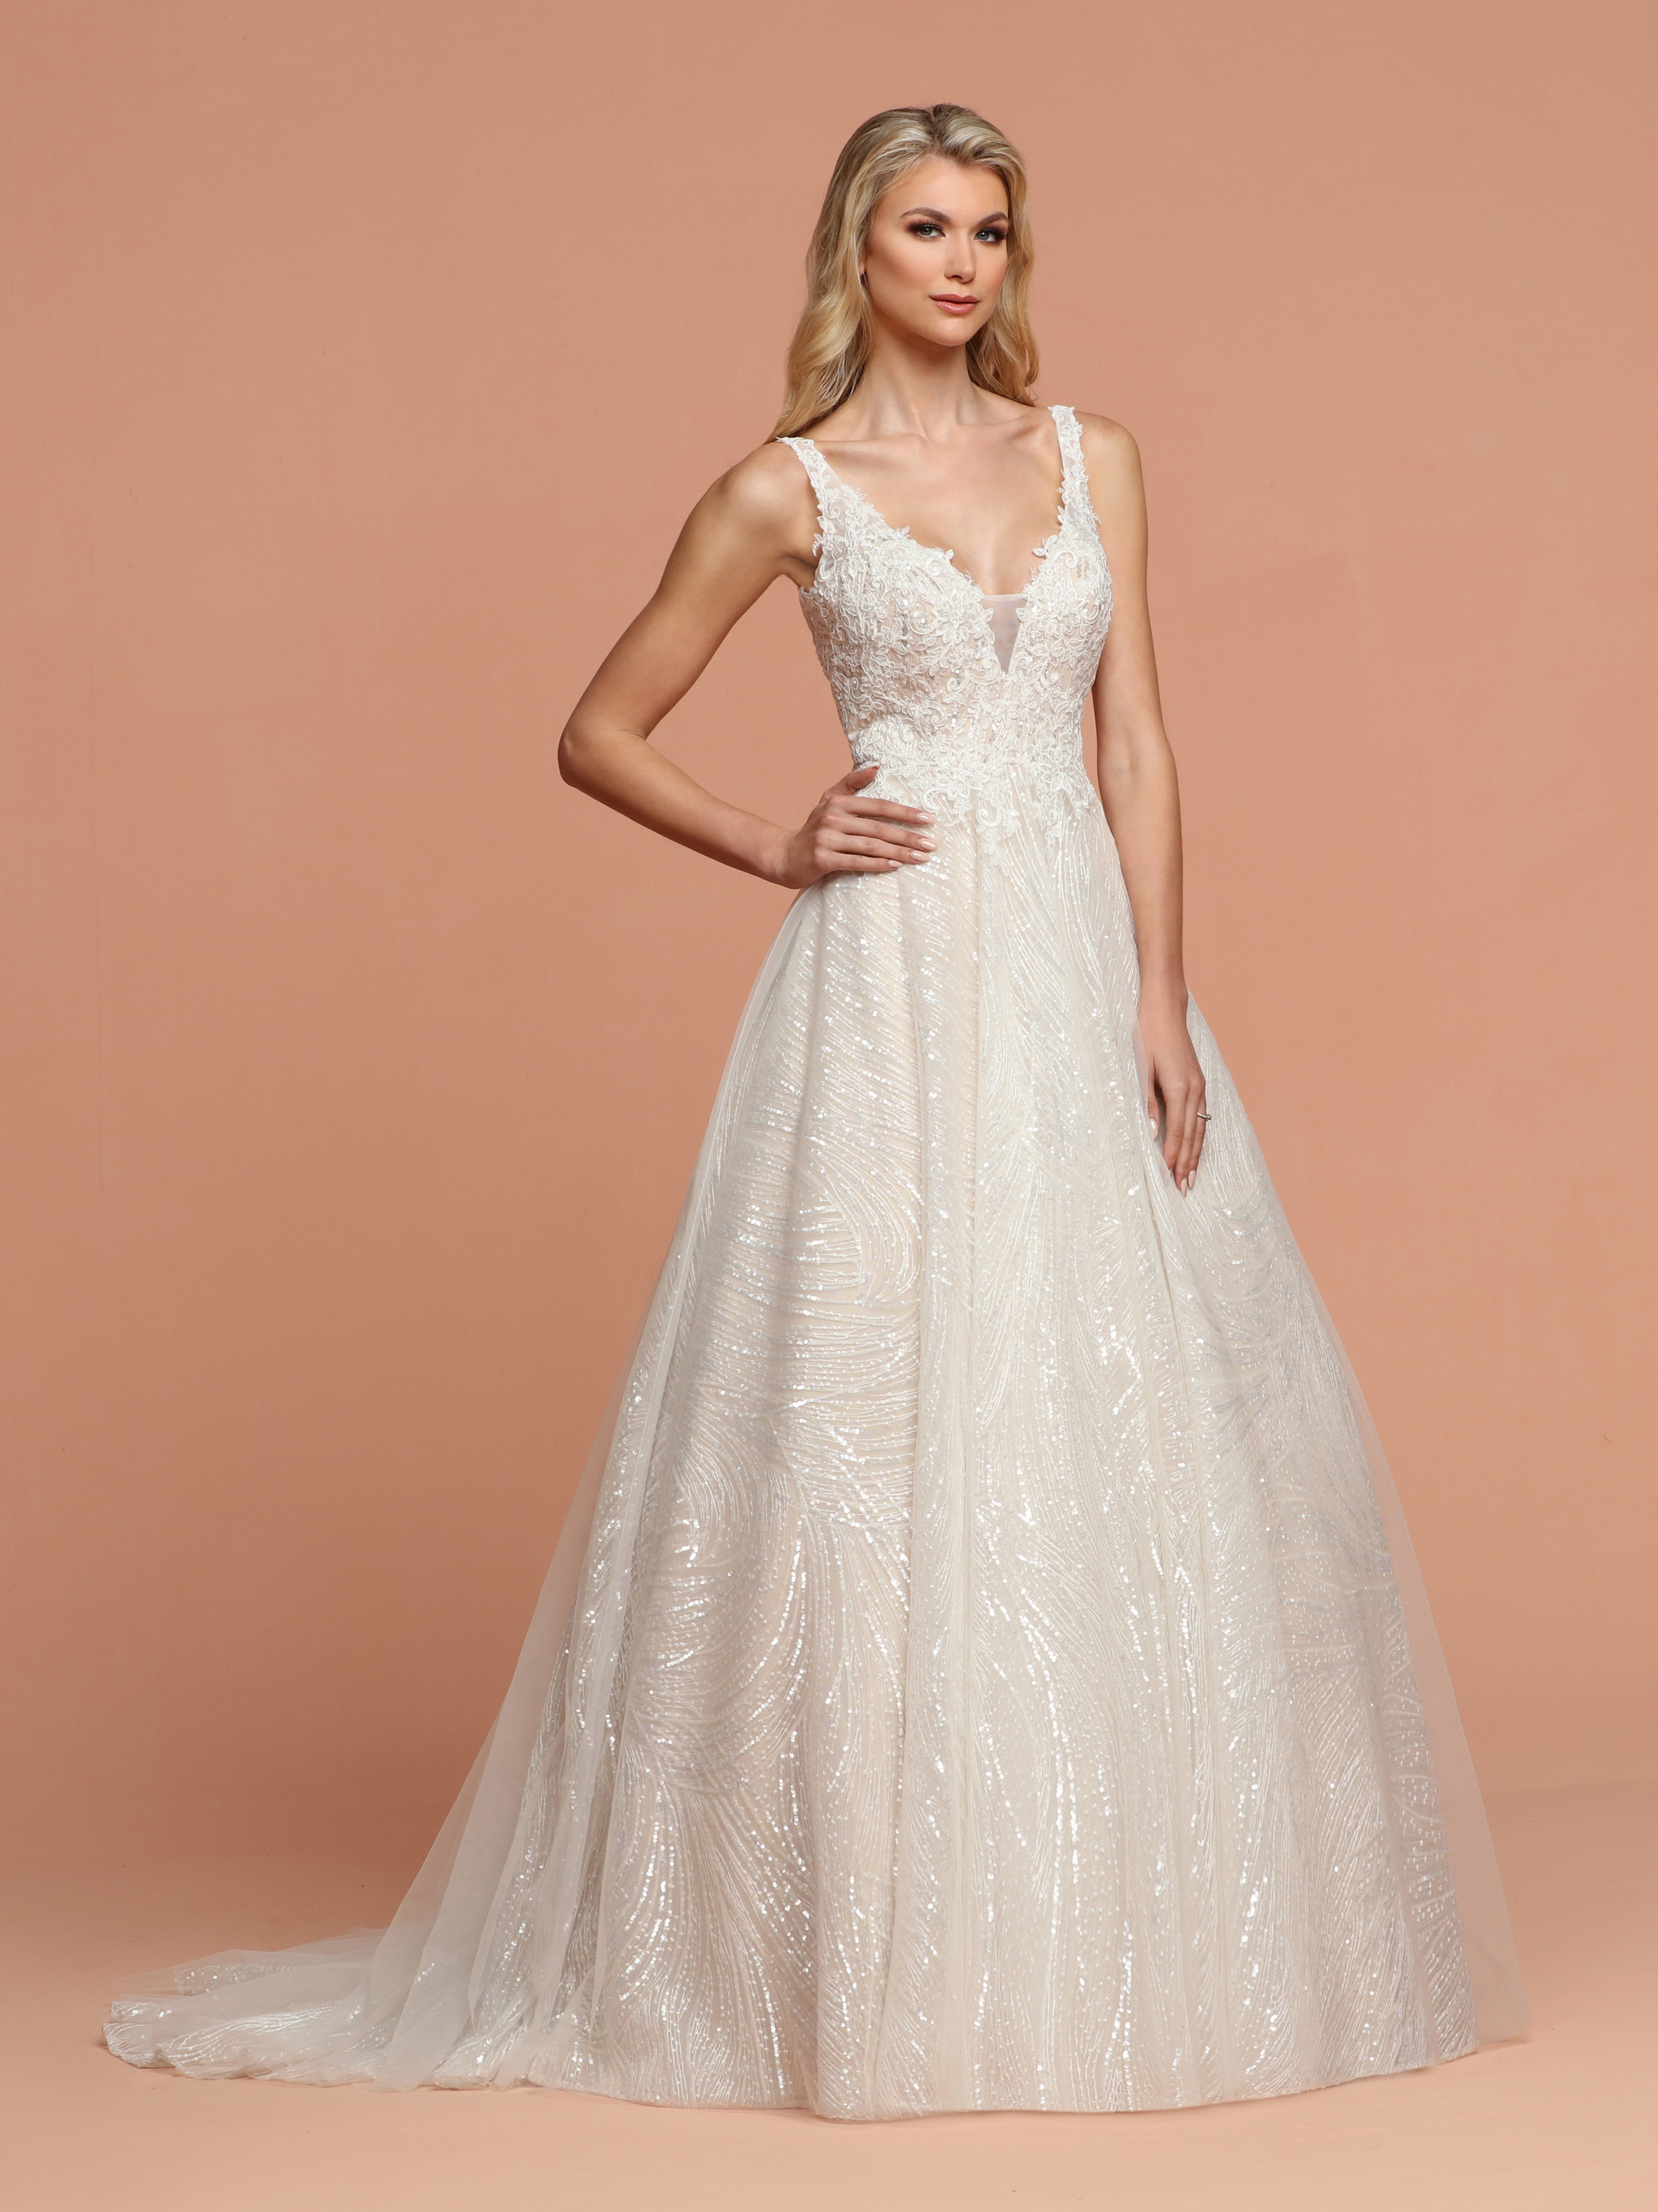 Oscar de la Renta Fall 2019 Wedding Dress Collection